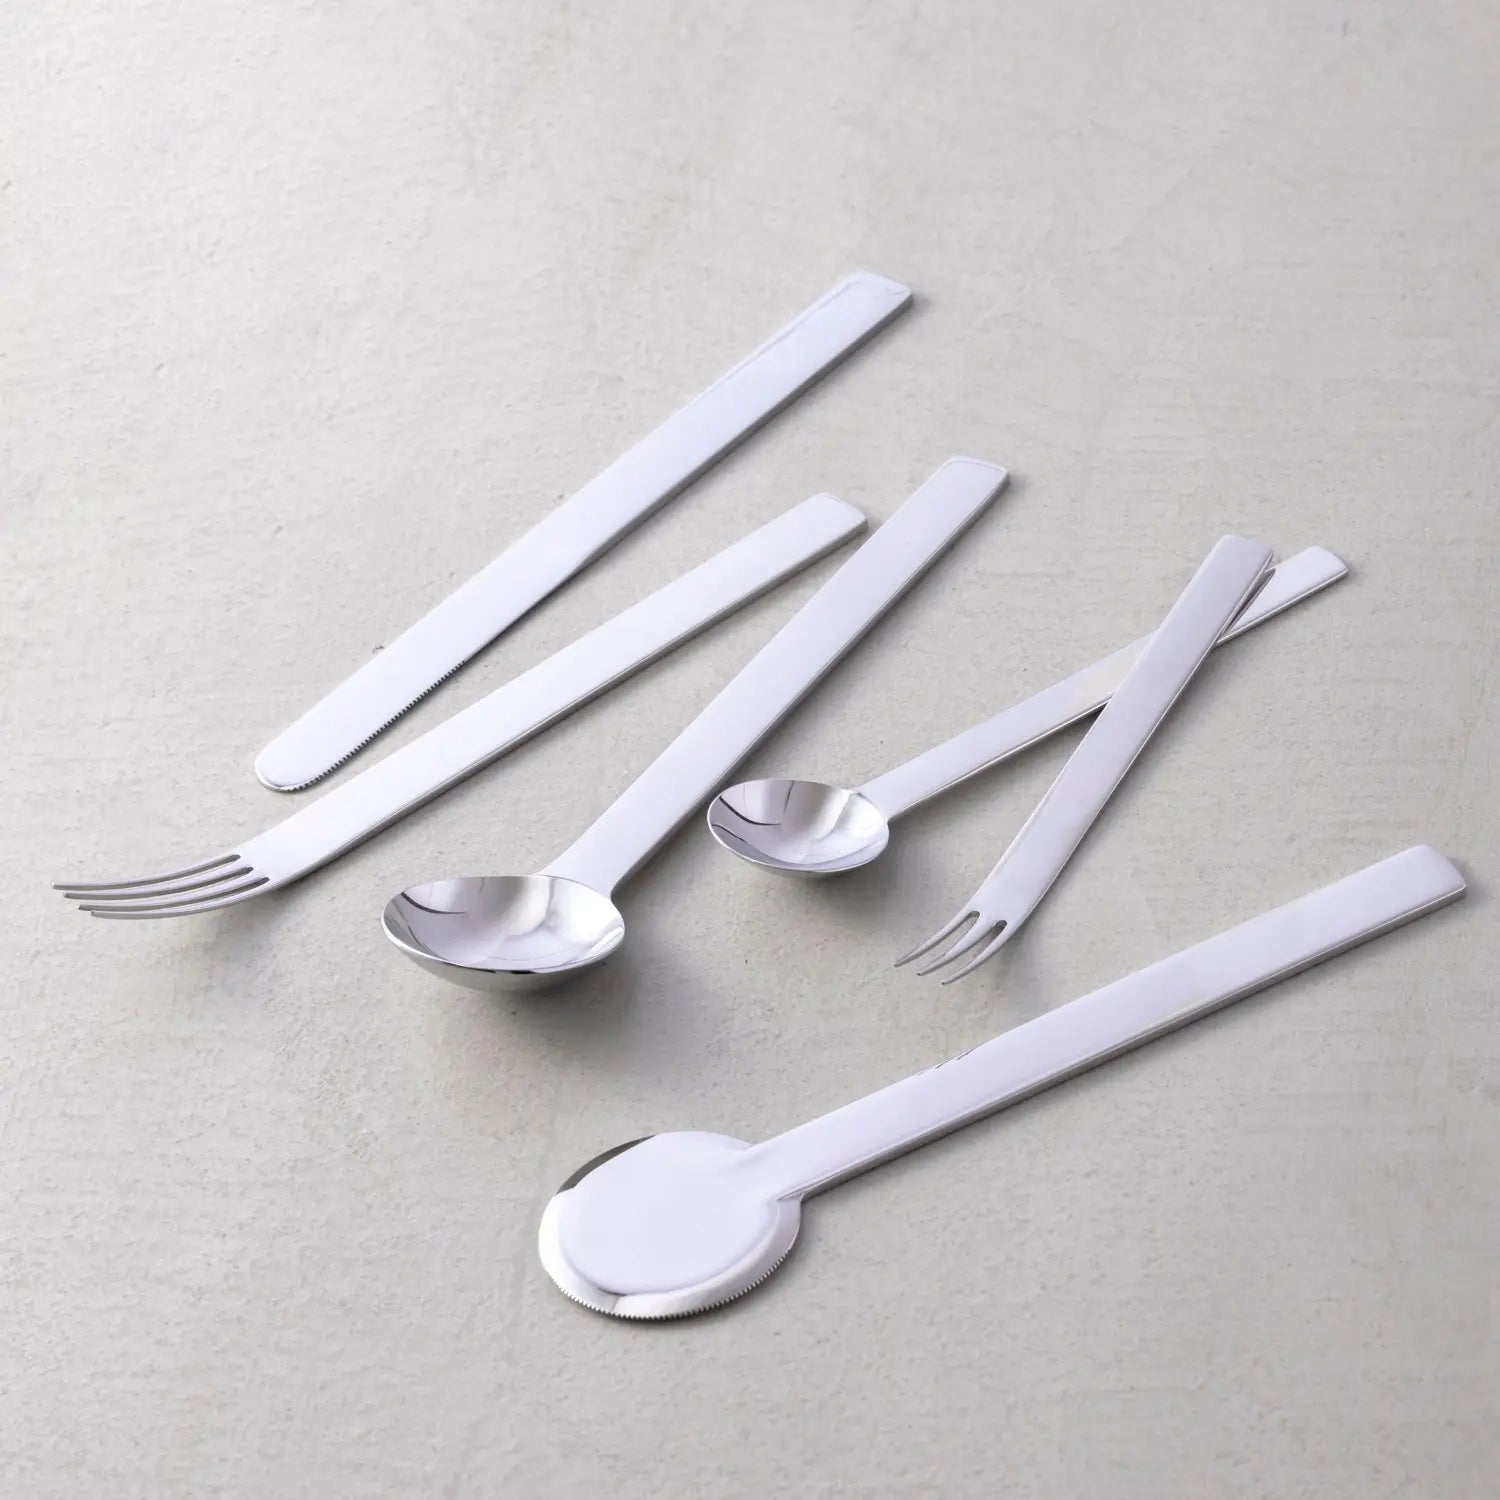 Tsubame Shinko TI-1 Stainless Steel Dinner Spoon 19.5cm Loose Cutlery